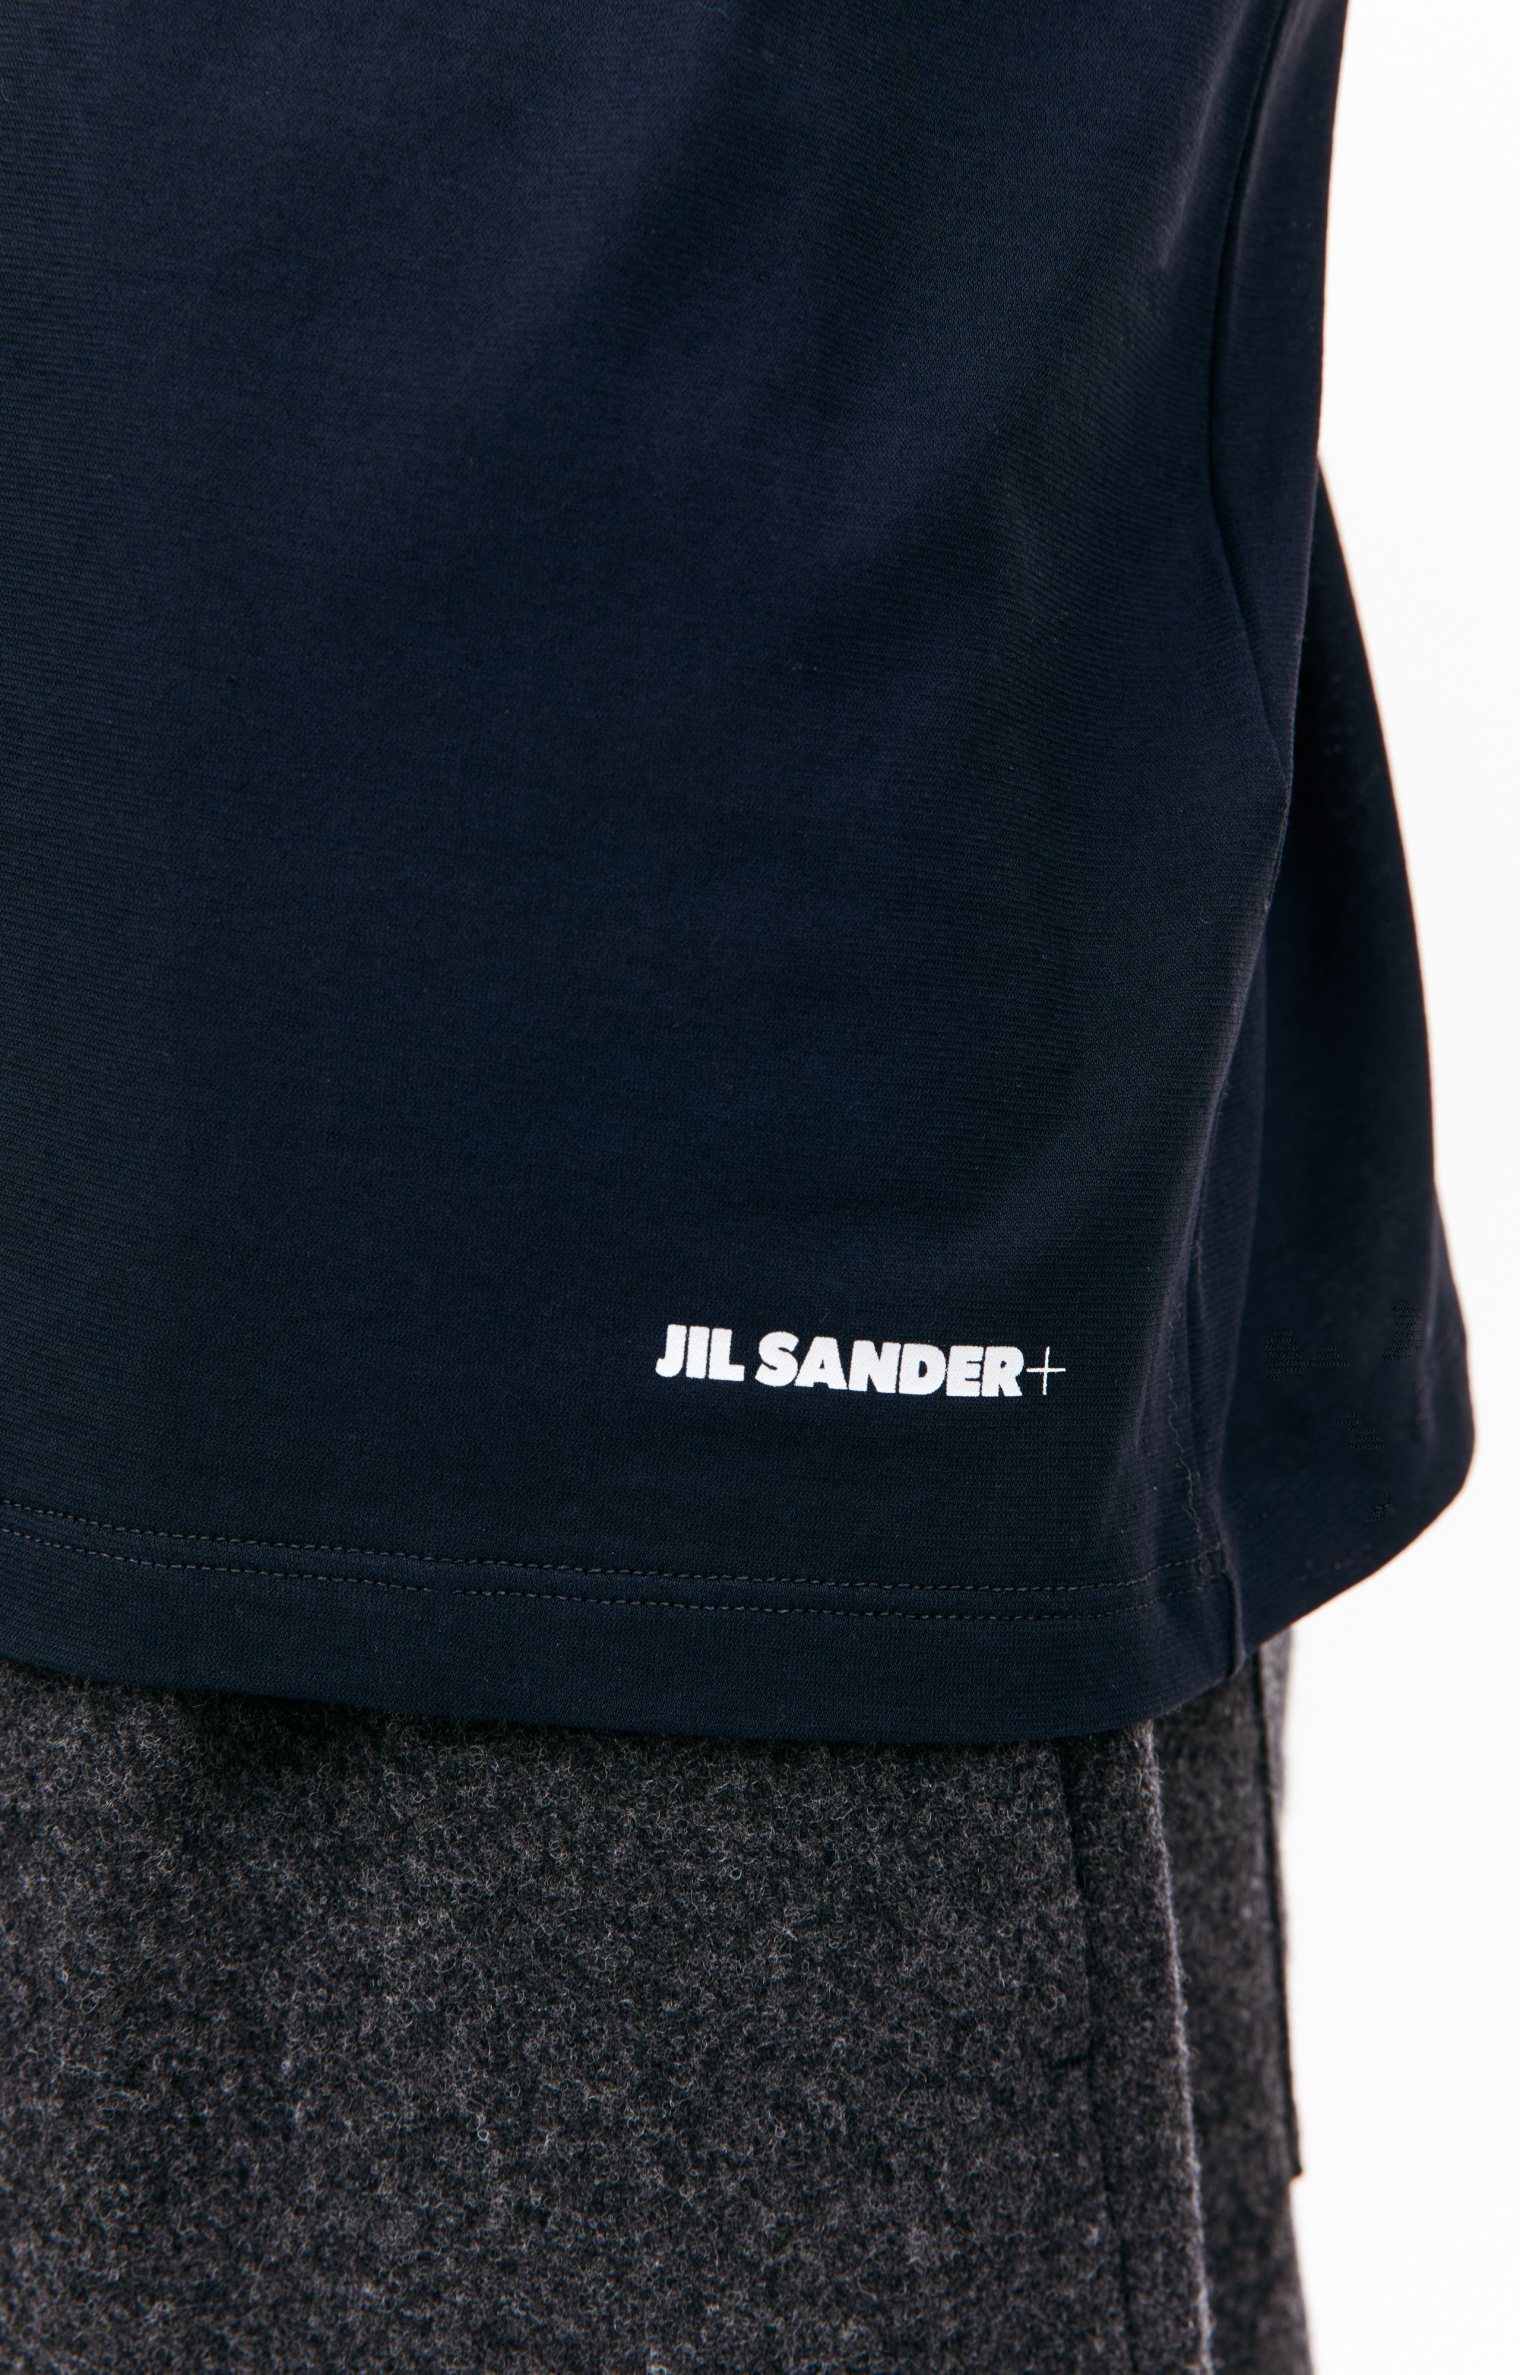 Jil Sander Navy blue cotton t-shirt